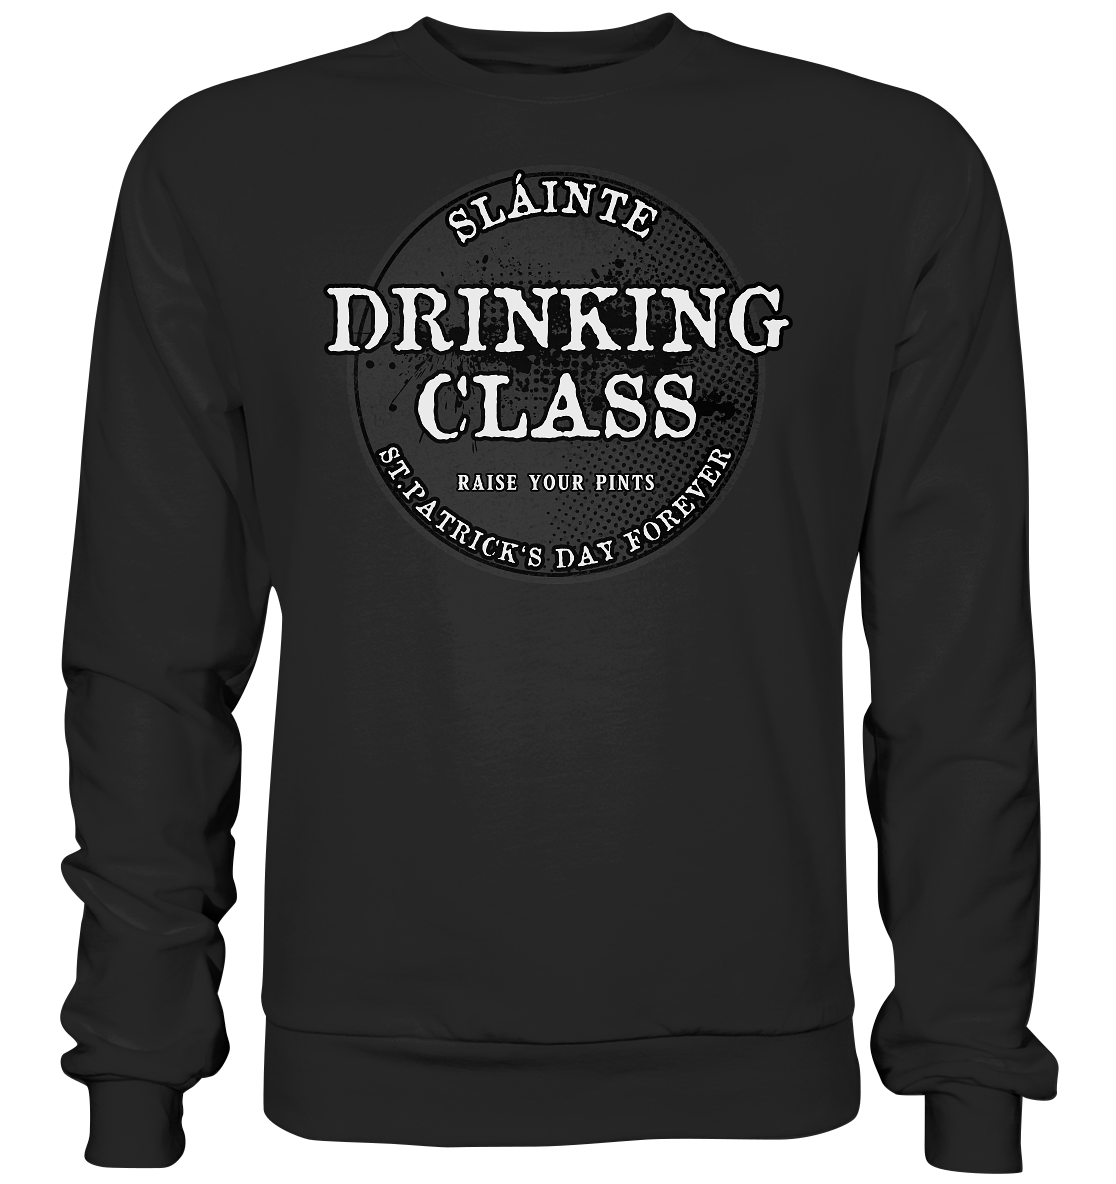 Drinking Class "St.Patrick's Day Forever" - Premium Sweatshirt